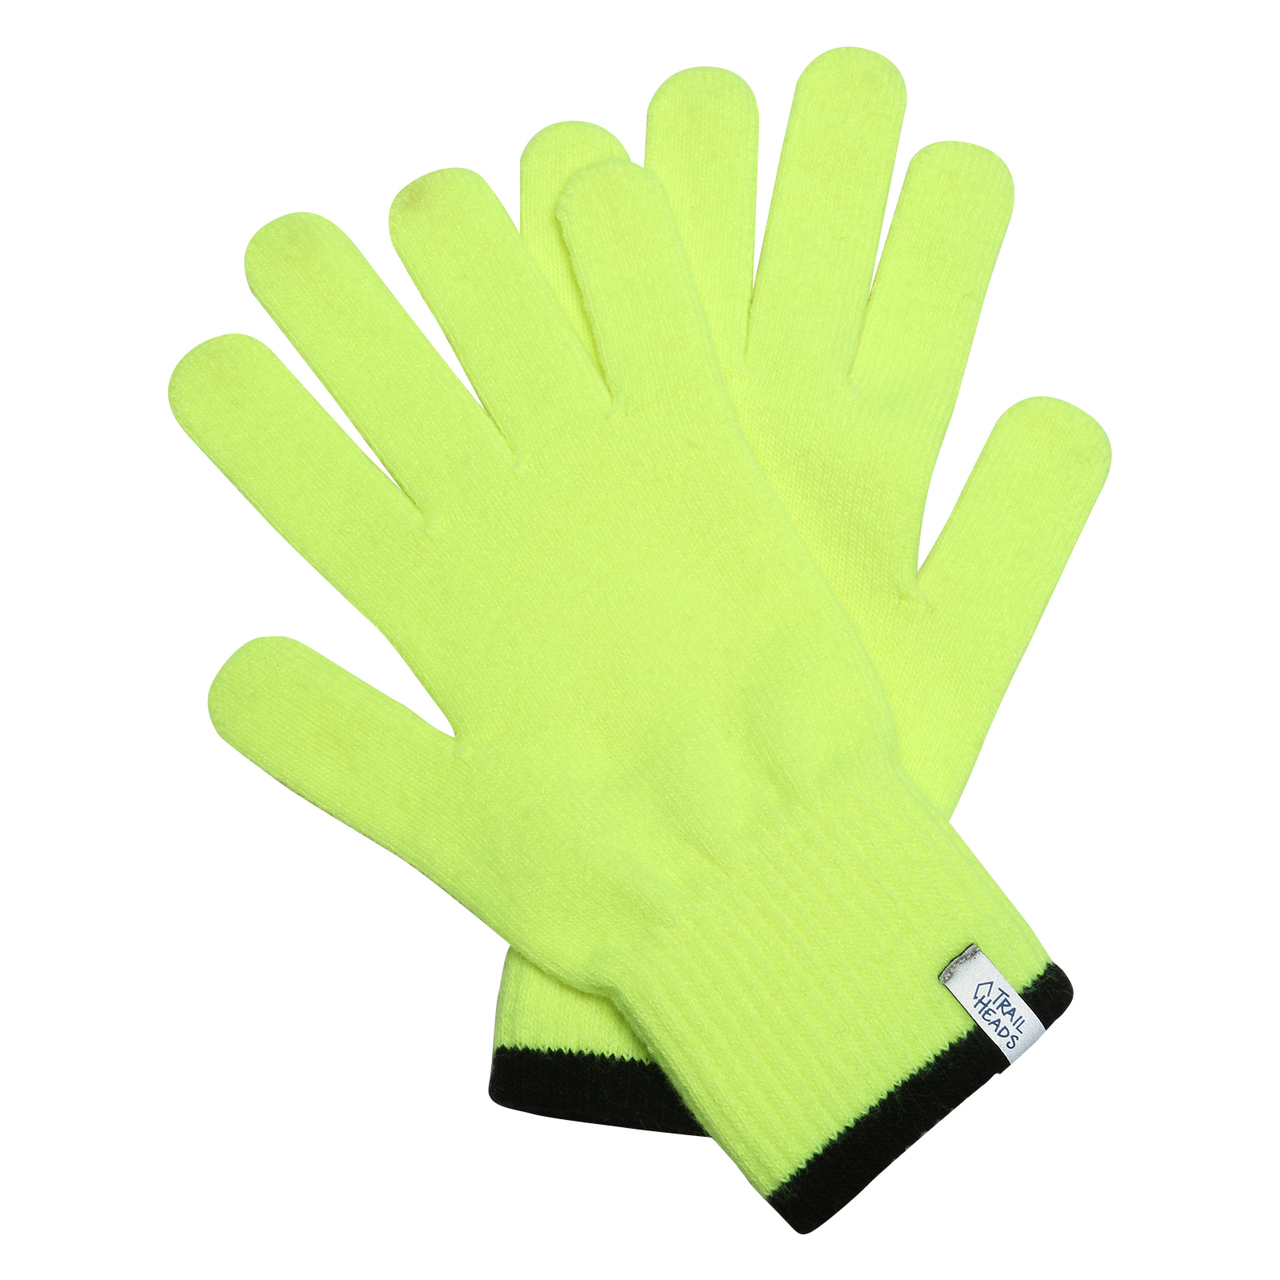 Hi Vis glove liners for winter running